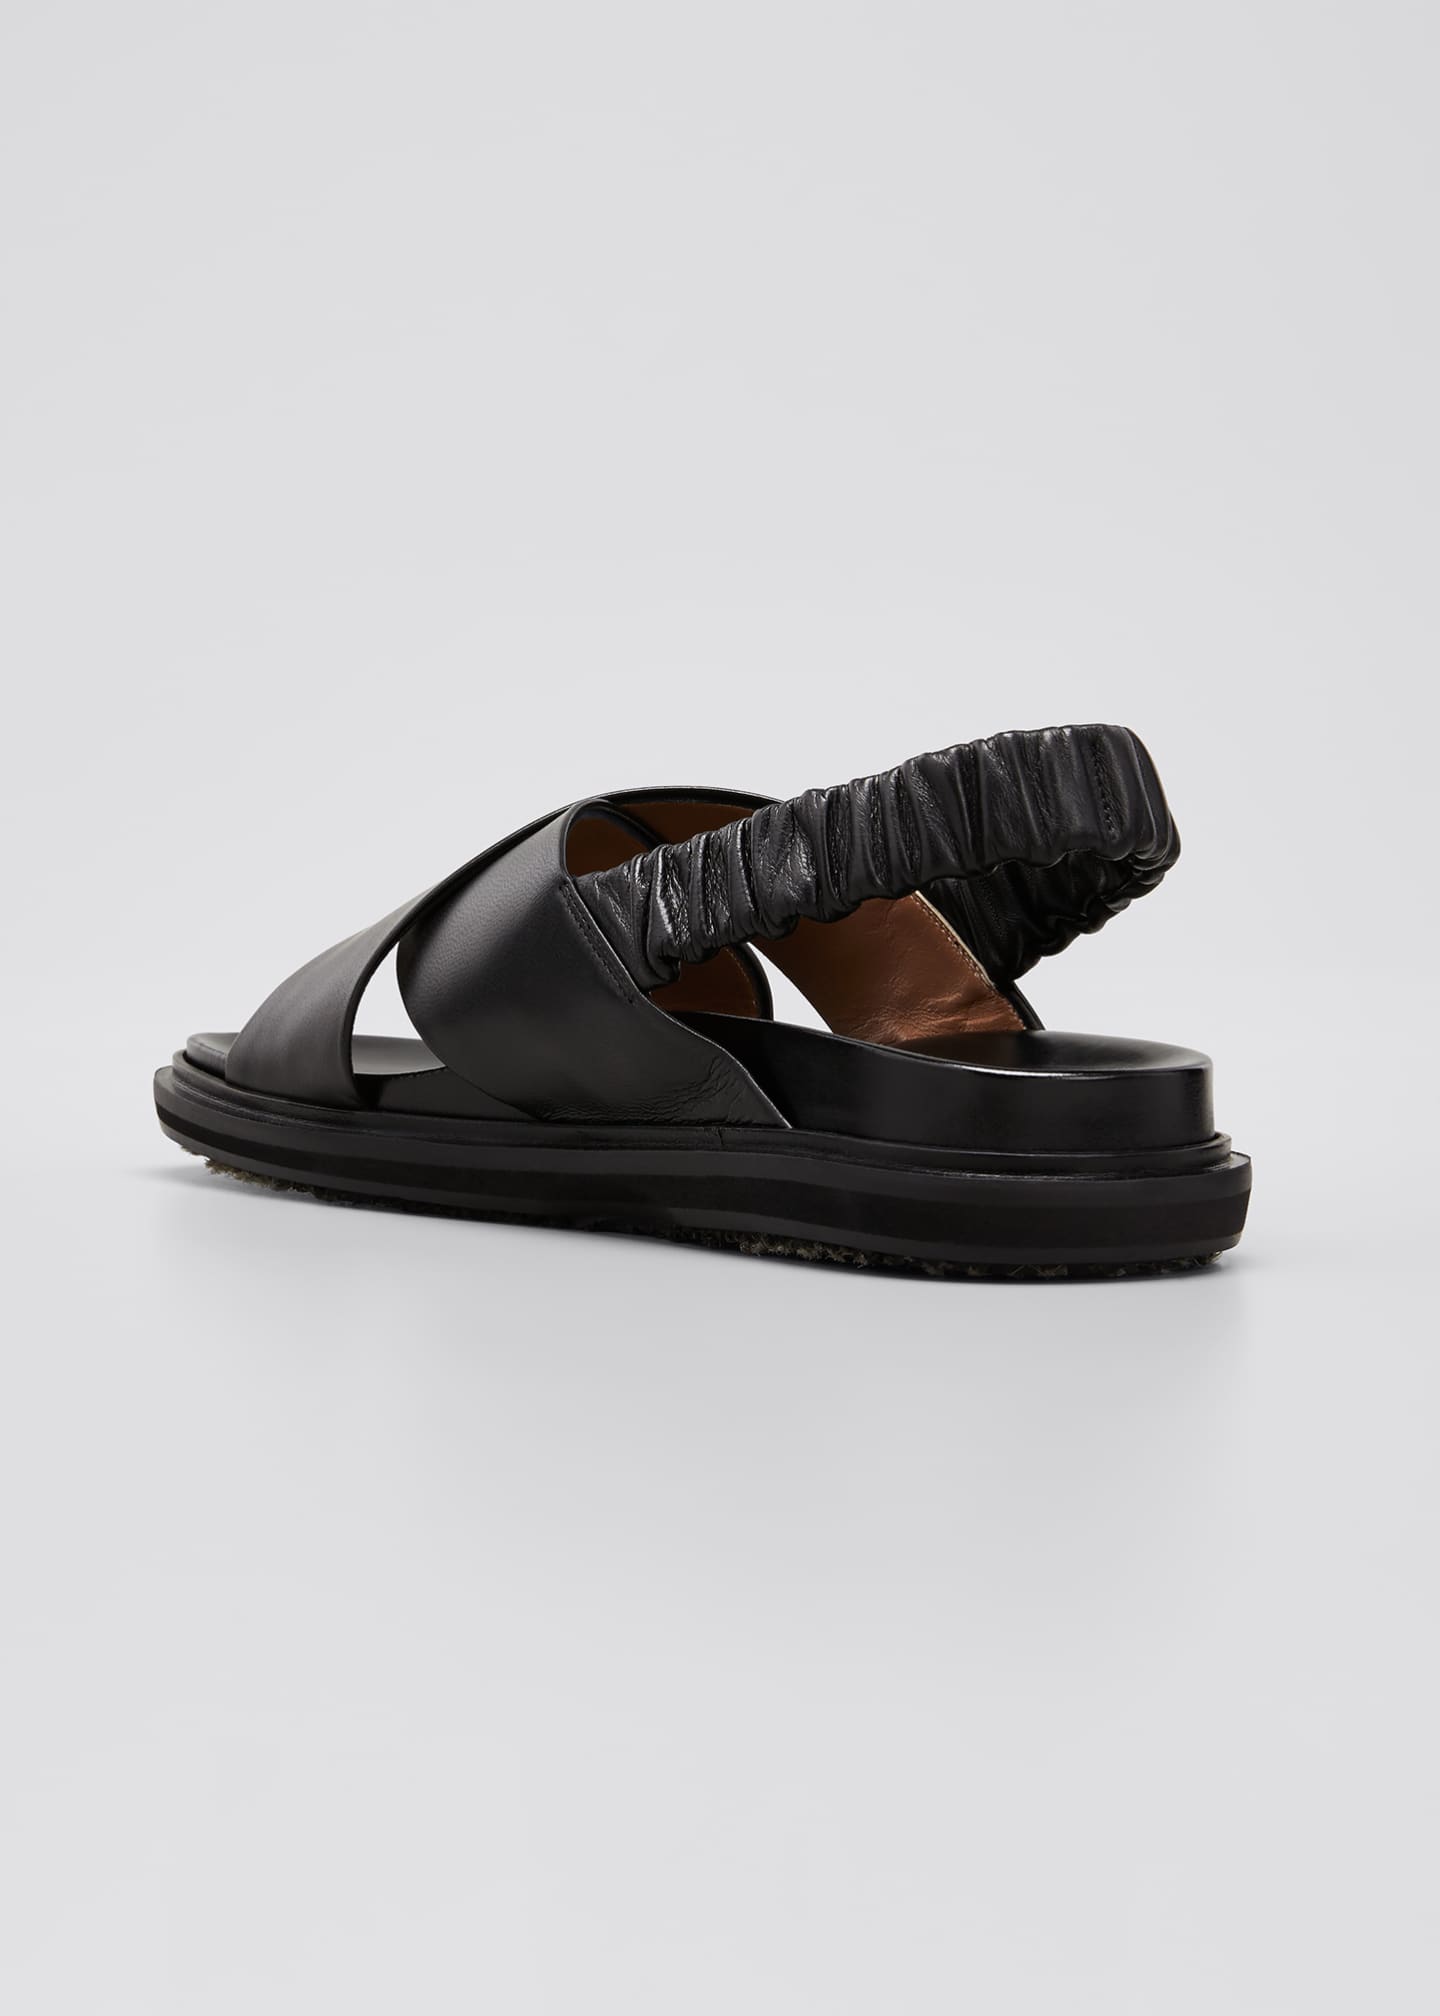 Marni Crisscross Leather Slingback Sandals - Bergdorf Goodman